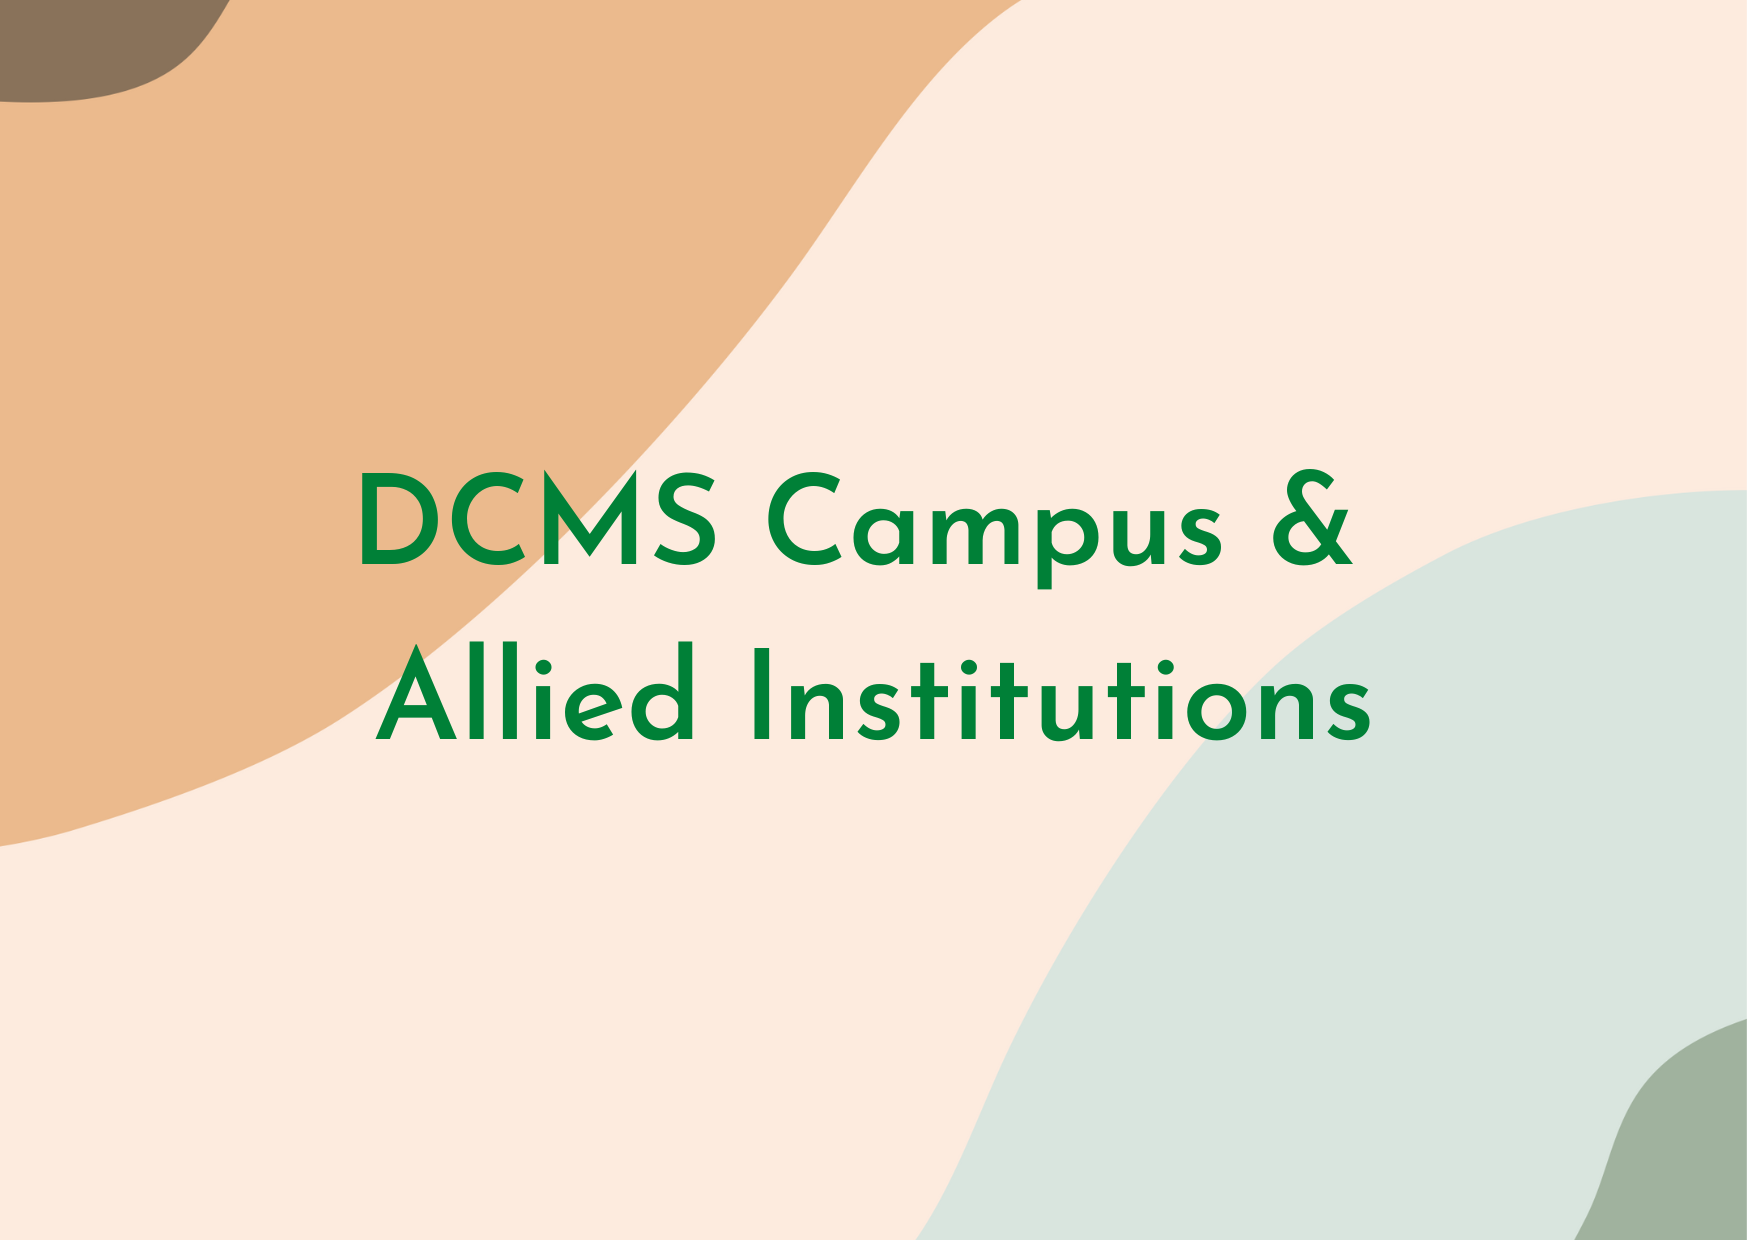  DCMS Campus & Allied Institutions 